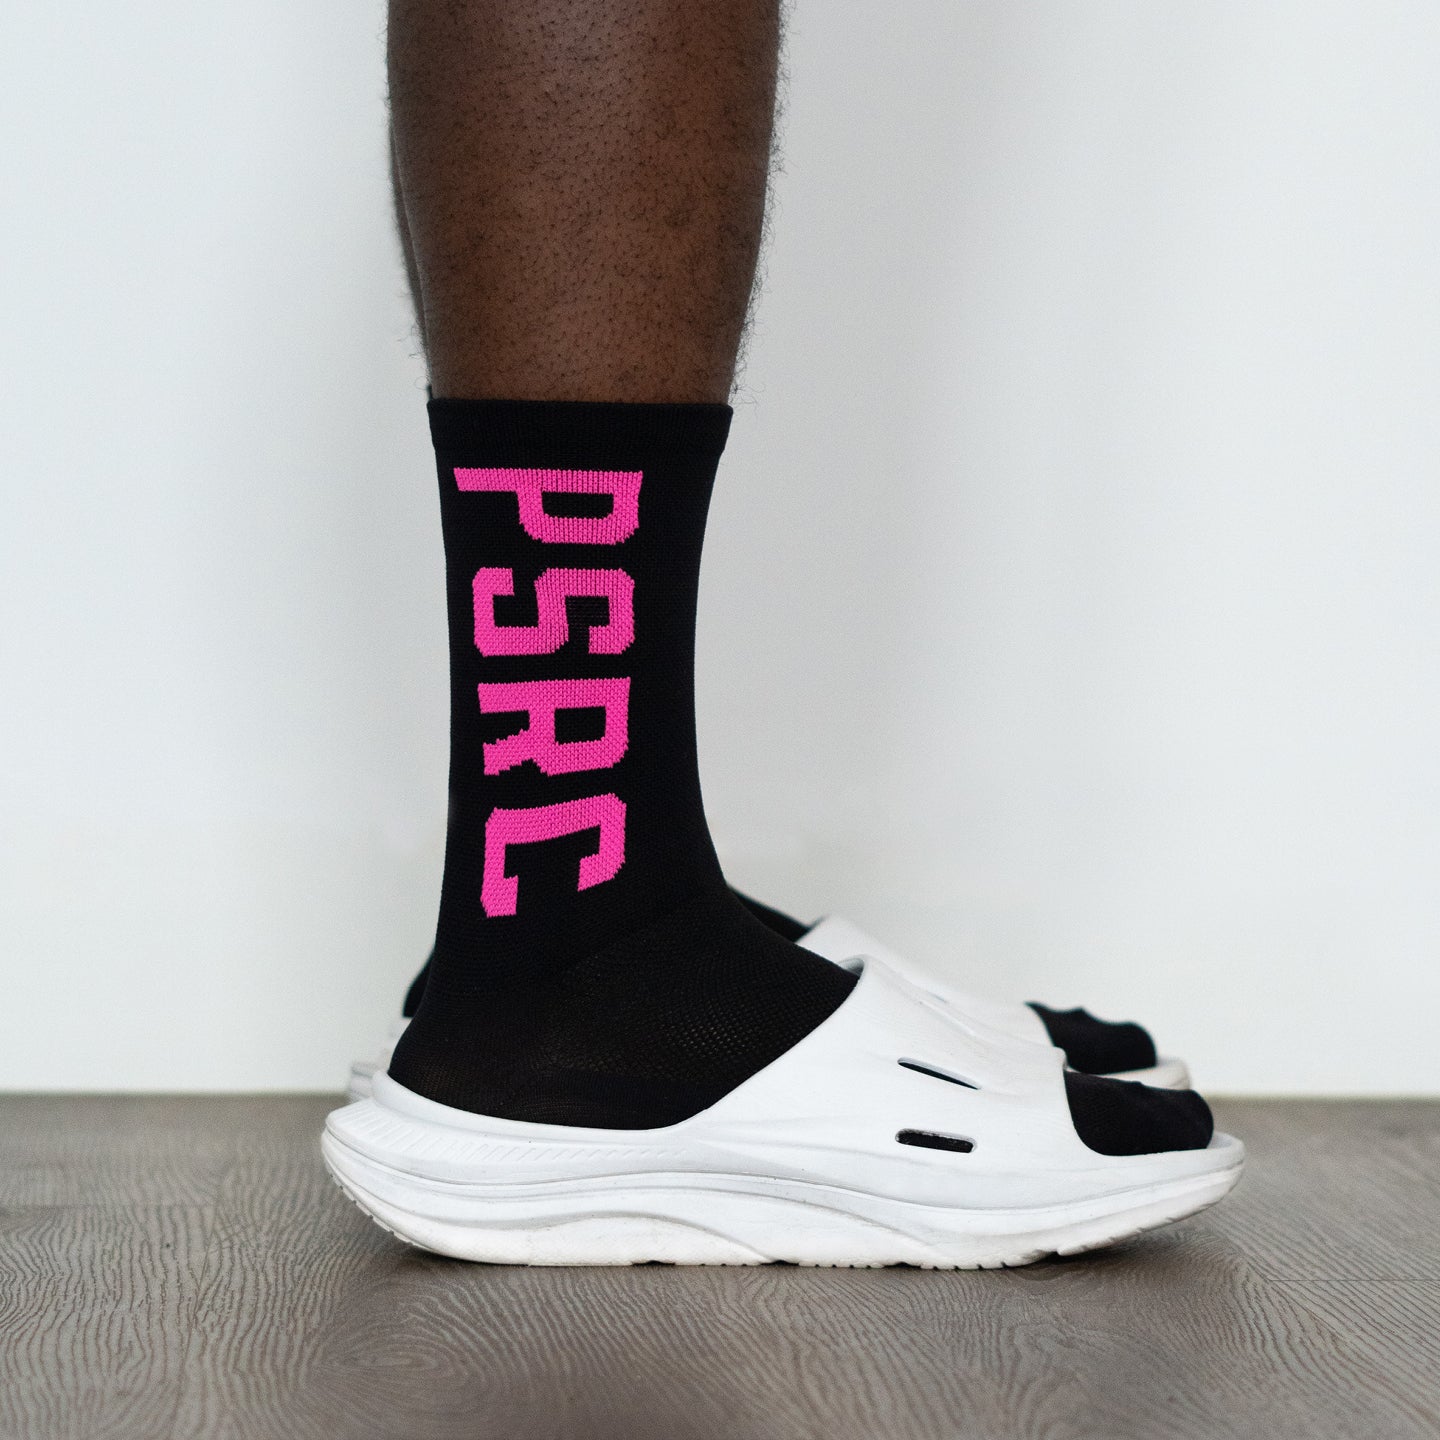 PSRC - Performance Socks - Black with Bold Pink PSRC